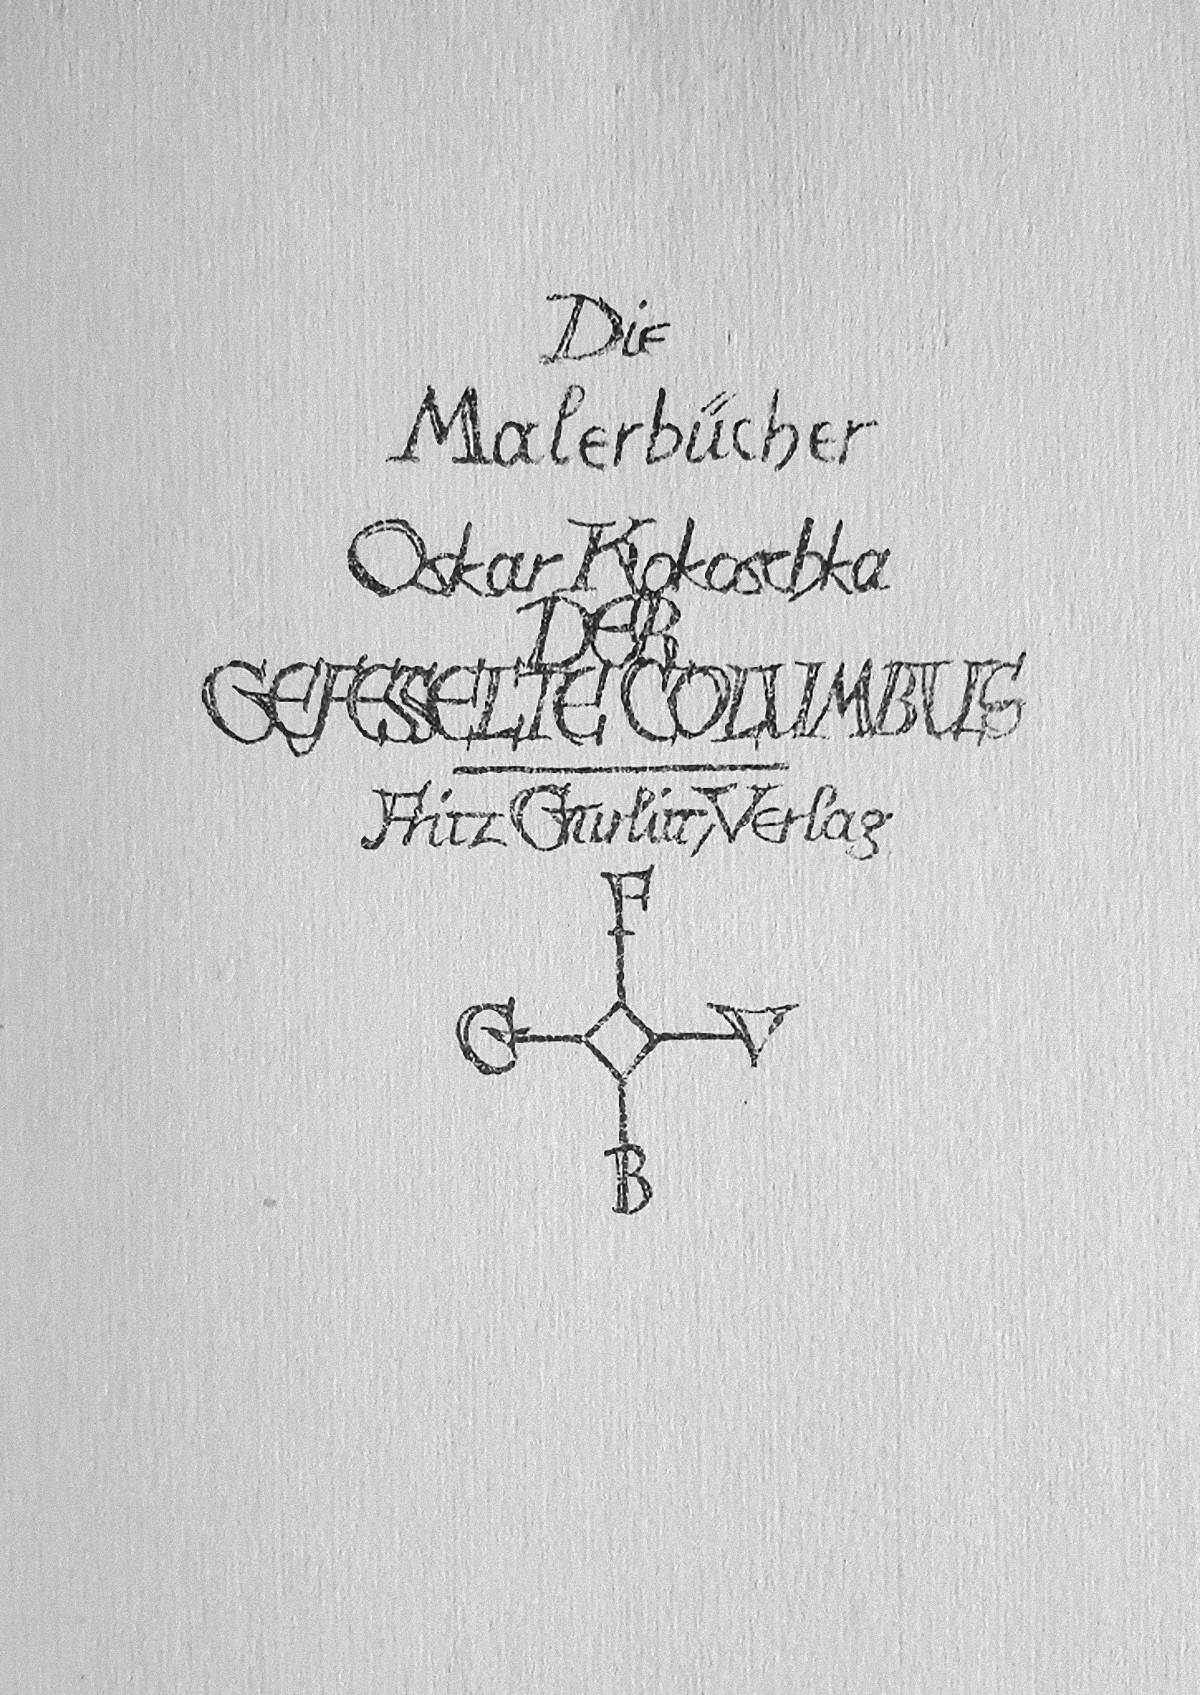 Der Gefesselte Columbus - Rare Book Illustrated by Oskar Kokoschka - 1921 For Sale 2